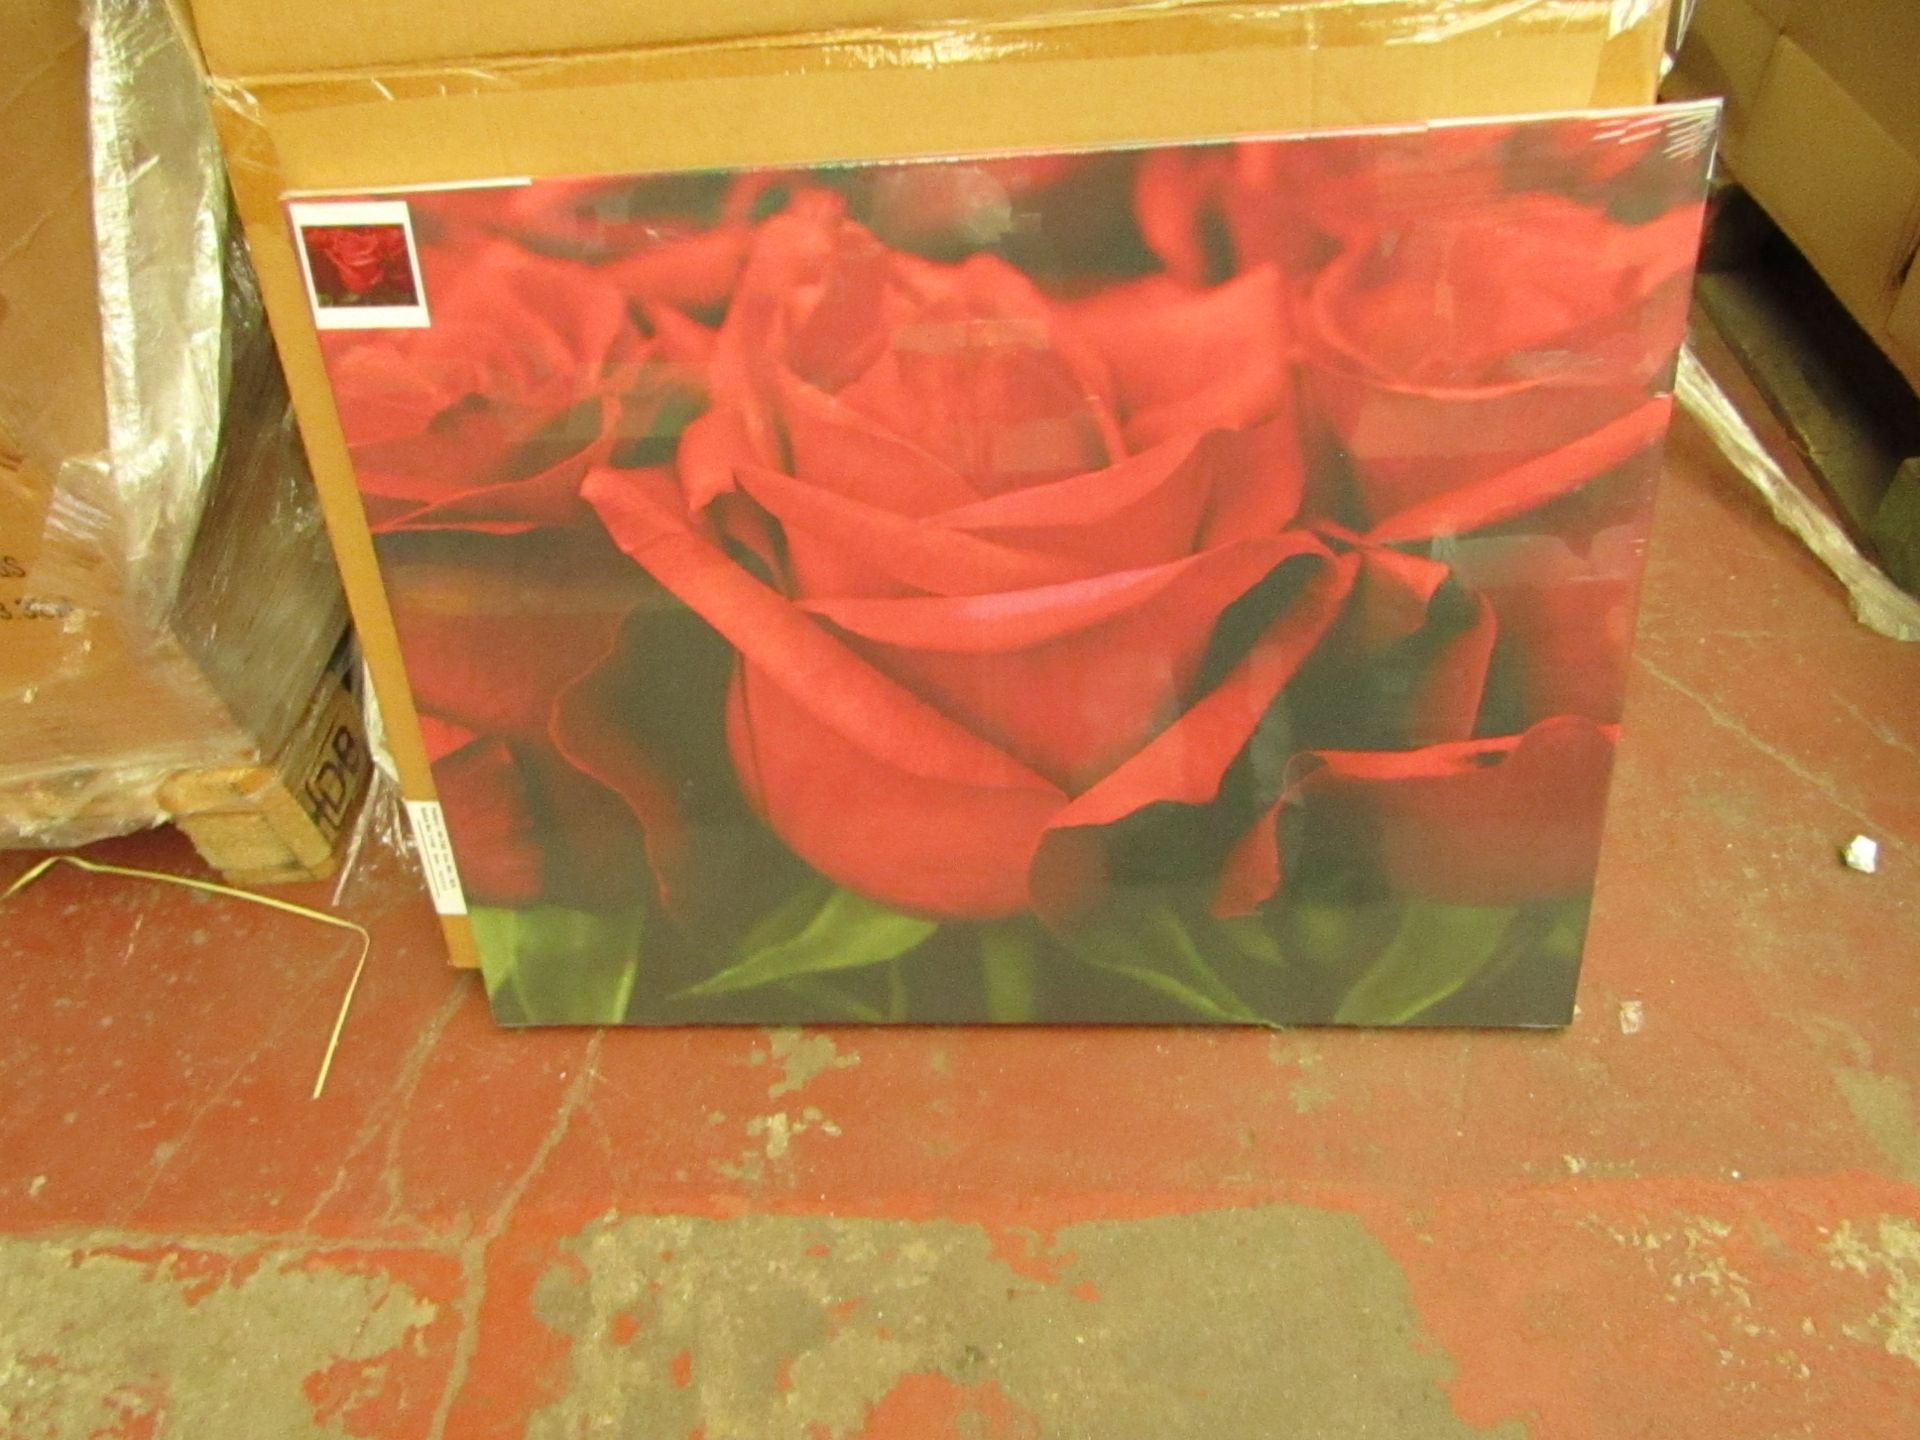 1 x Box of 2 per box Valentine Roses Prints - 80 x 60cm - New & Boxed.